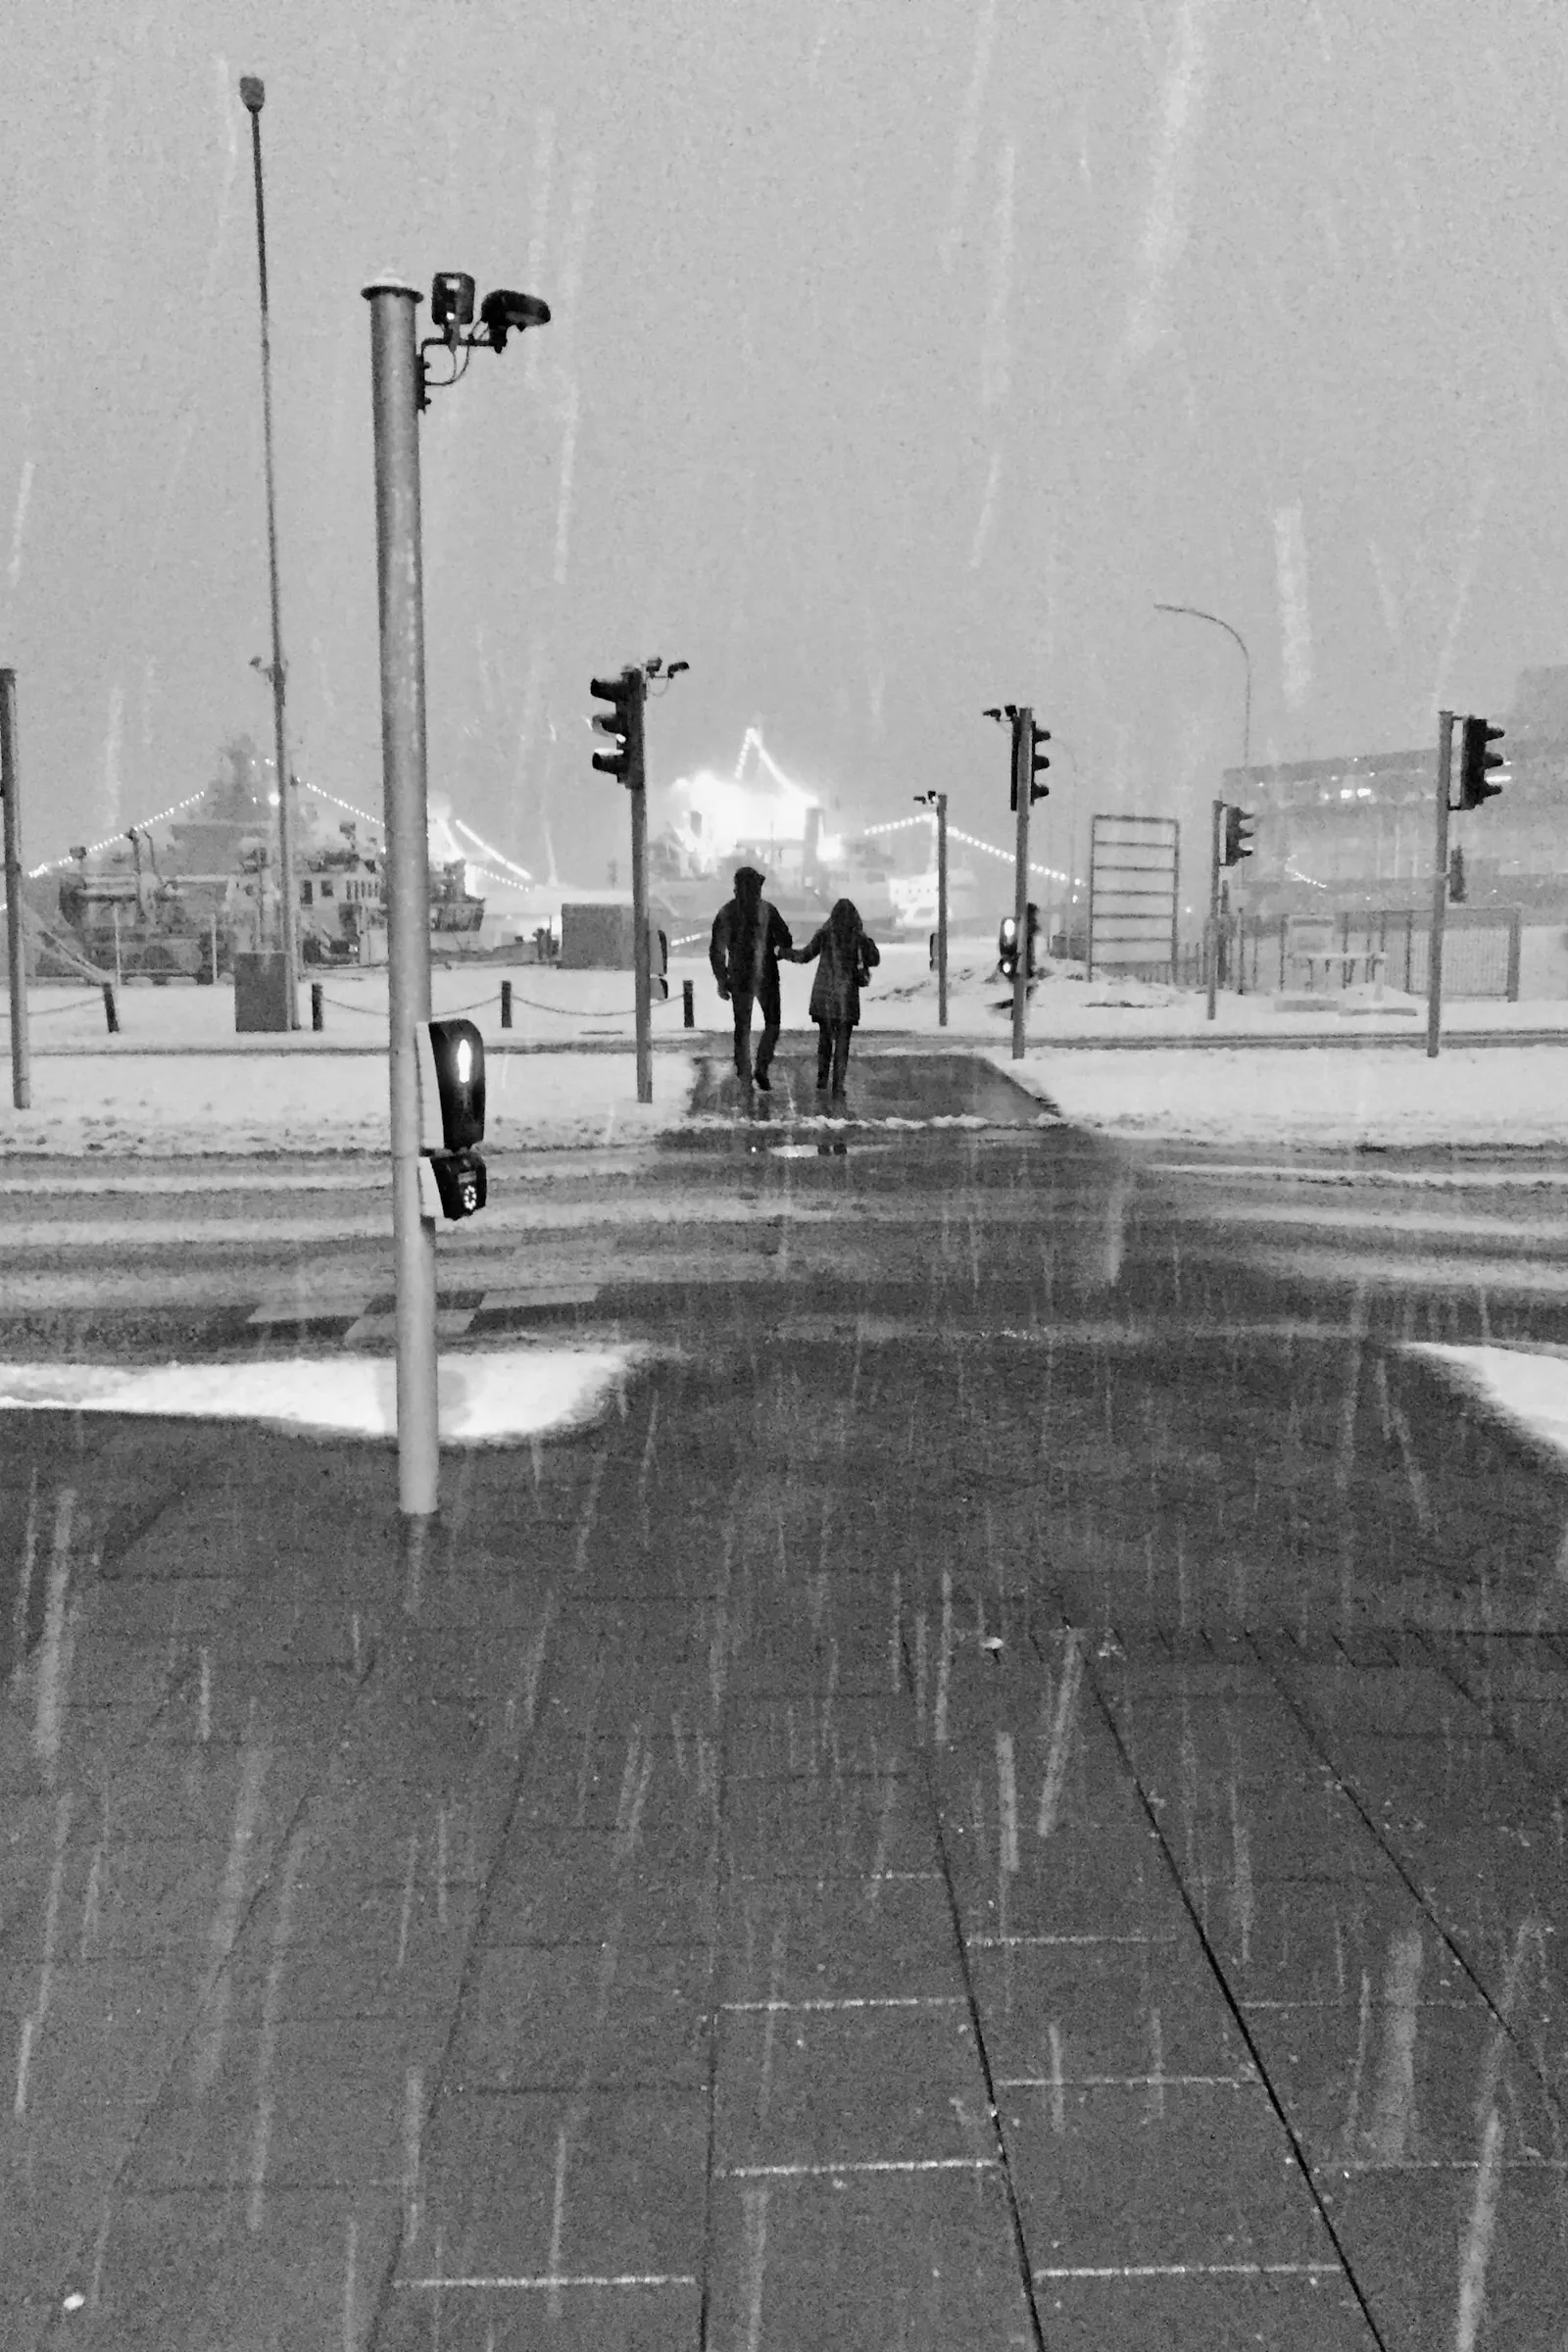 Two people walk together through snowy downtown Reykjavík